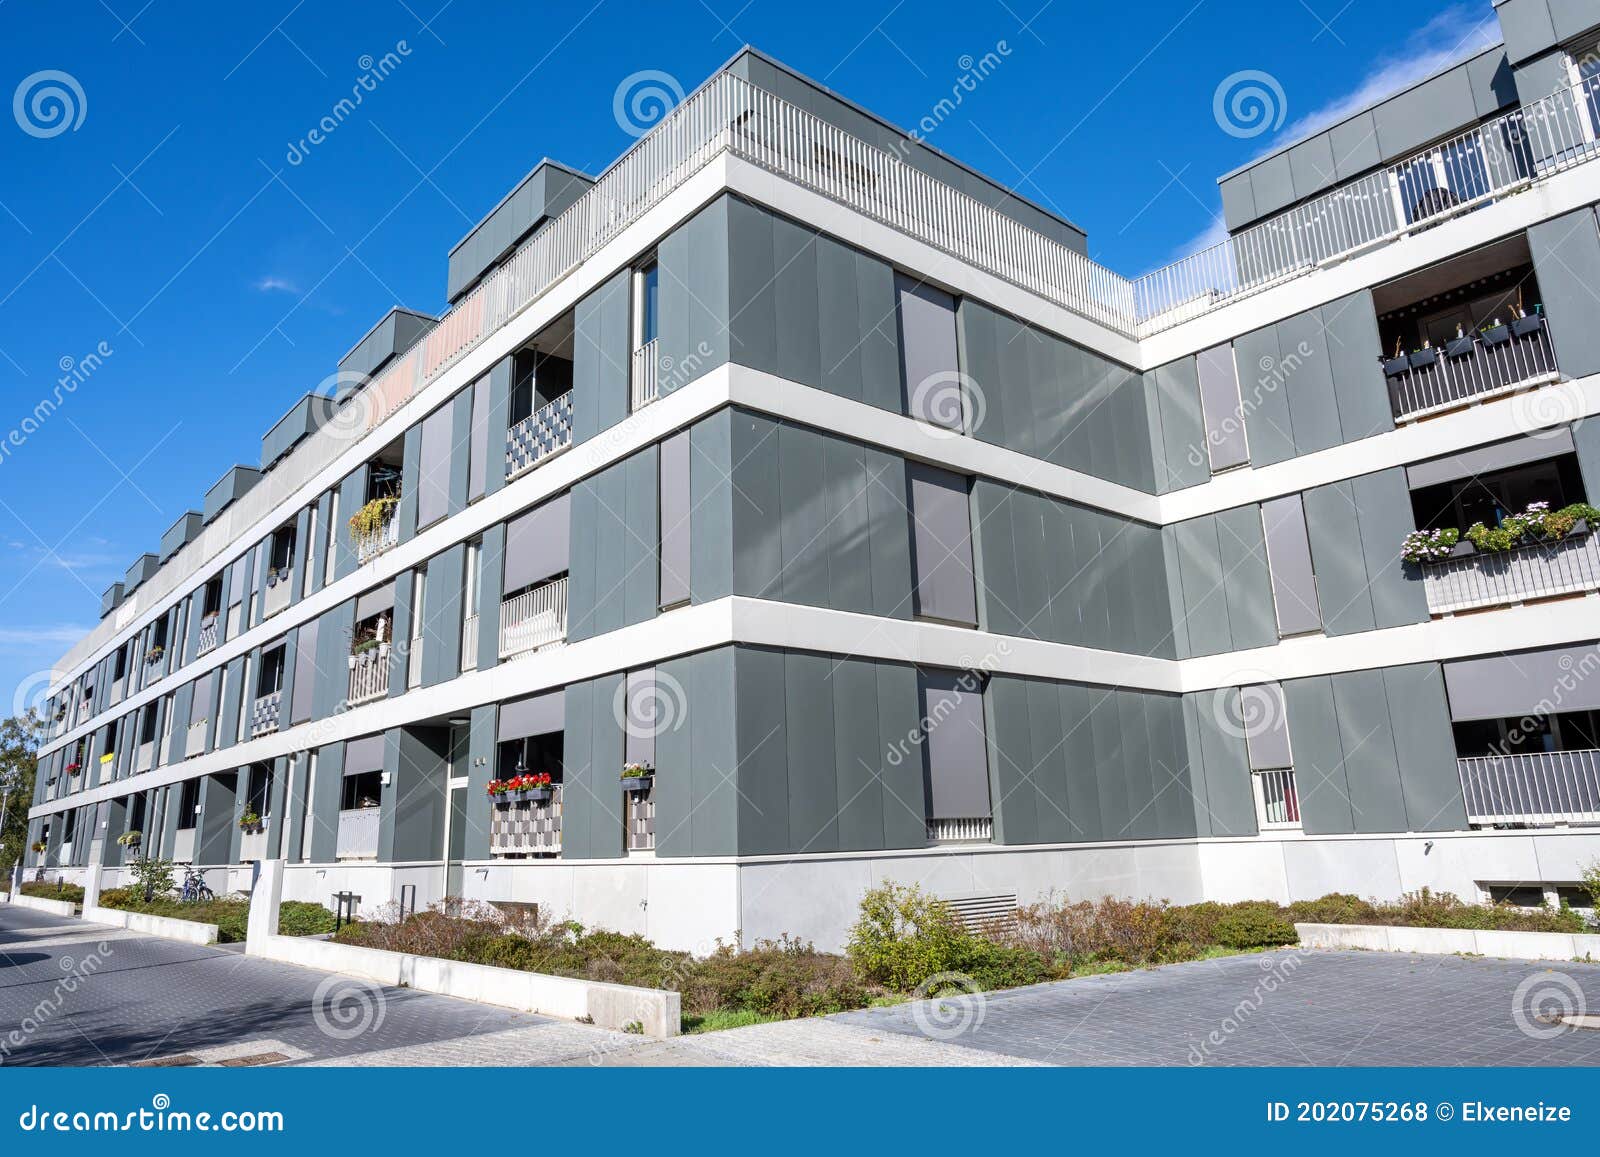 Casas De Apartamentos Serie Modernas Foto de archivo - Imagen de munich,  casa: 202075268